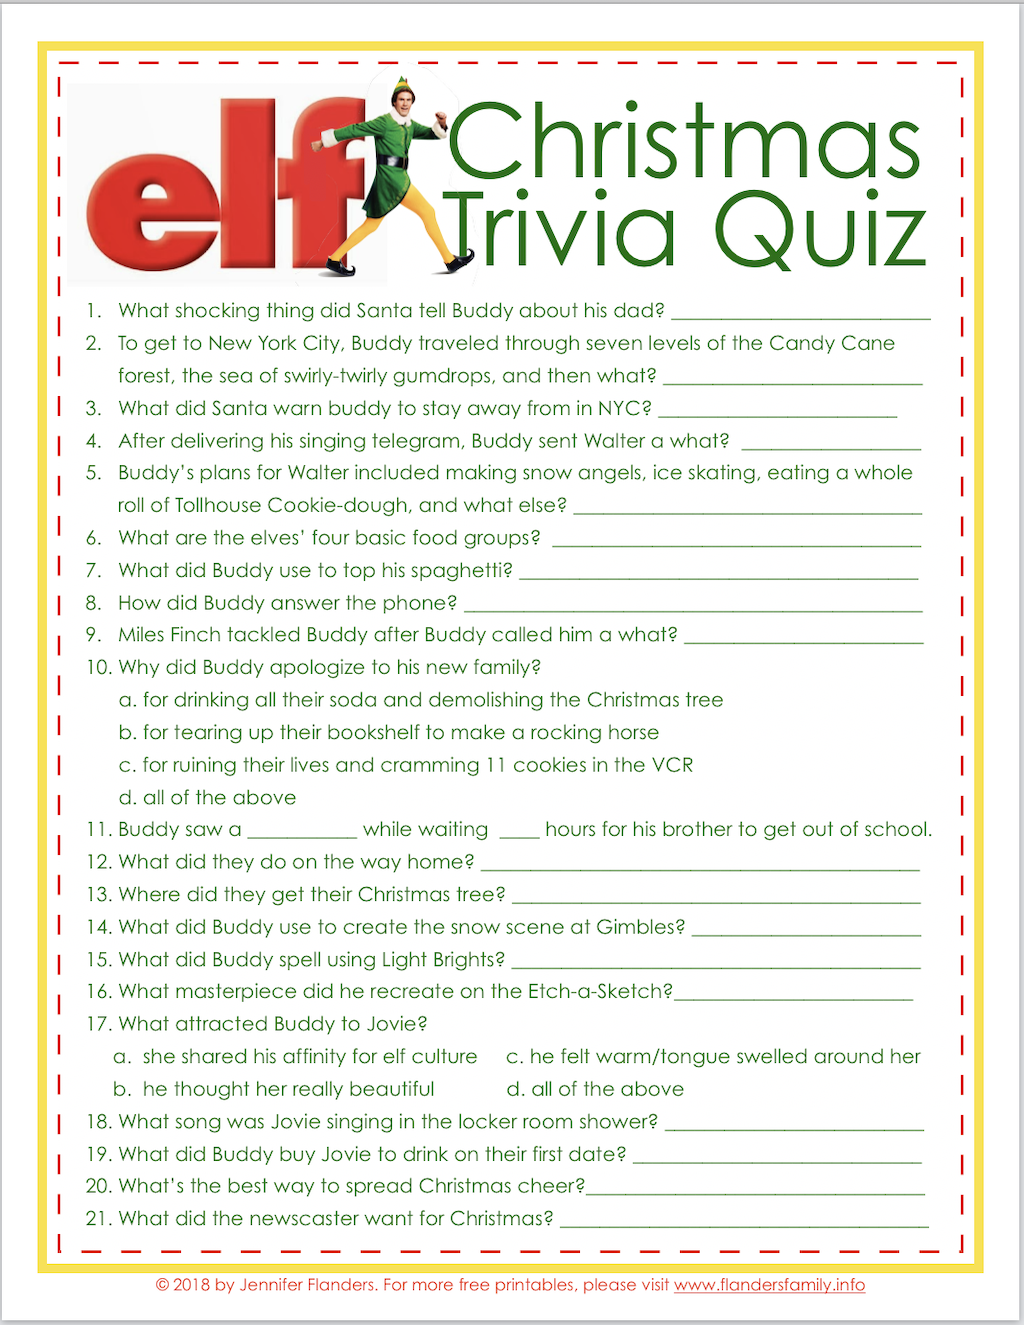 free-printable-easy-christmas-trivia-questions-and-answers-printable-blog